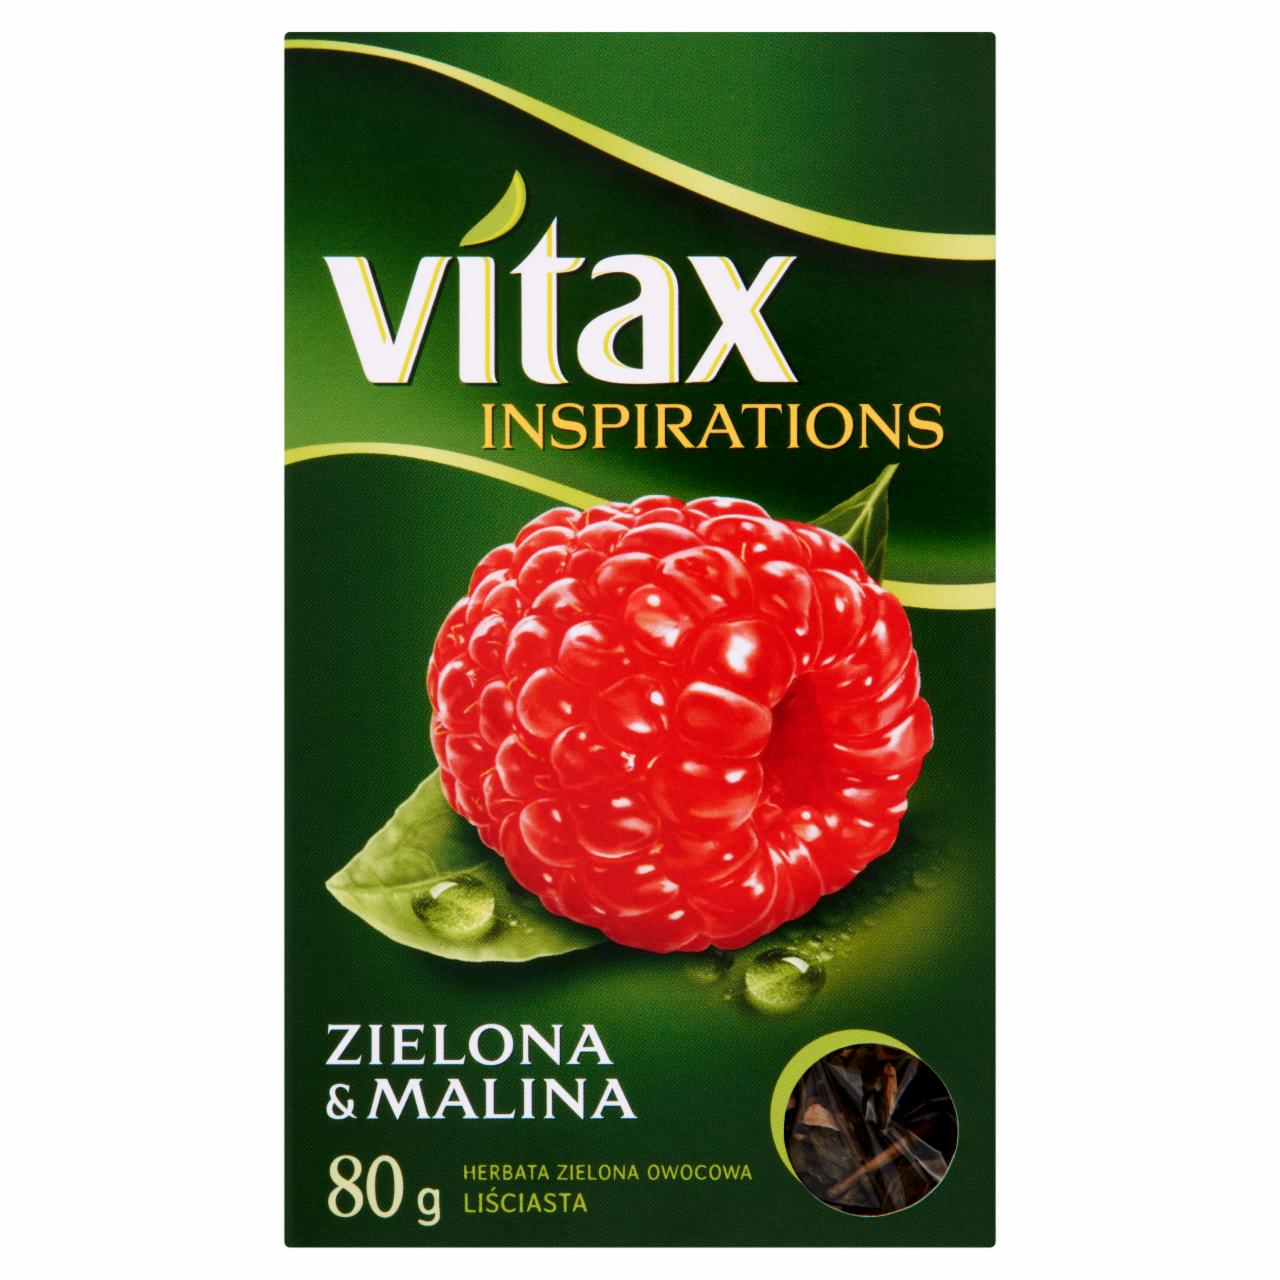 Zdjęcia - Vitax Inspirations Zielona and Malina Herbata zielona owocowa 80 g